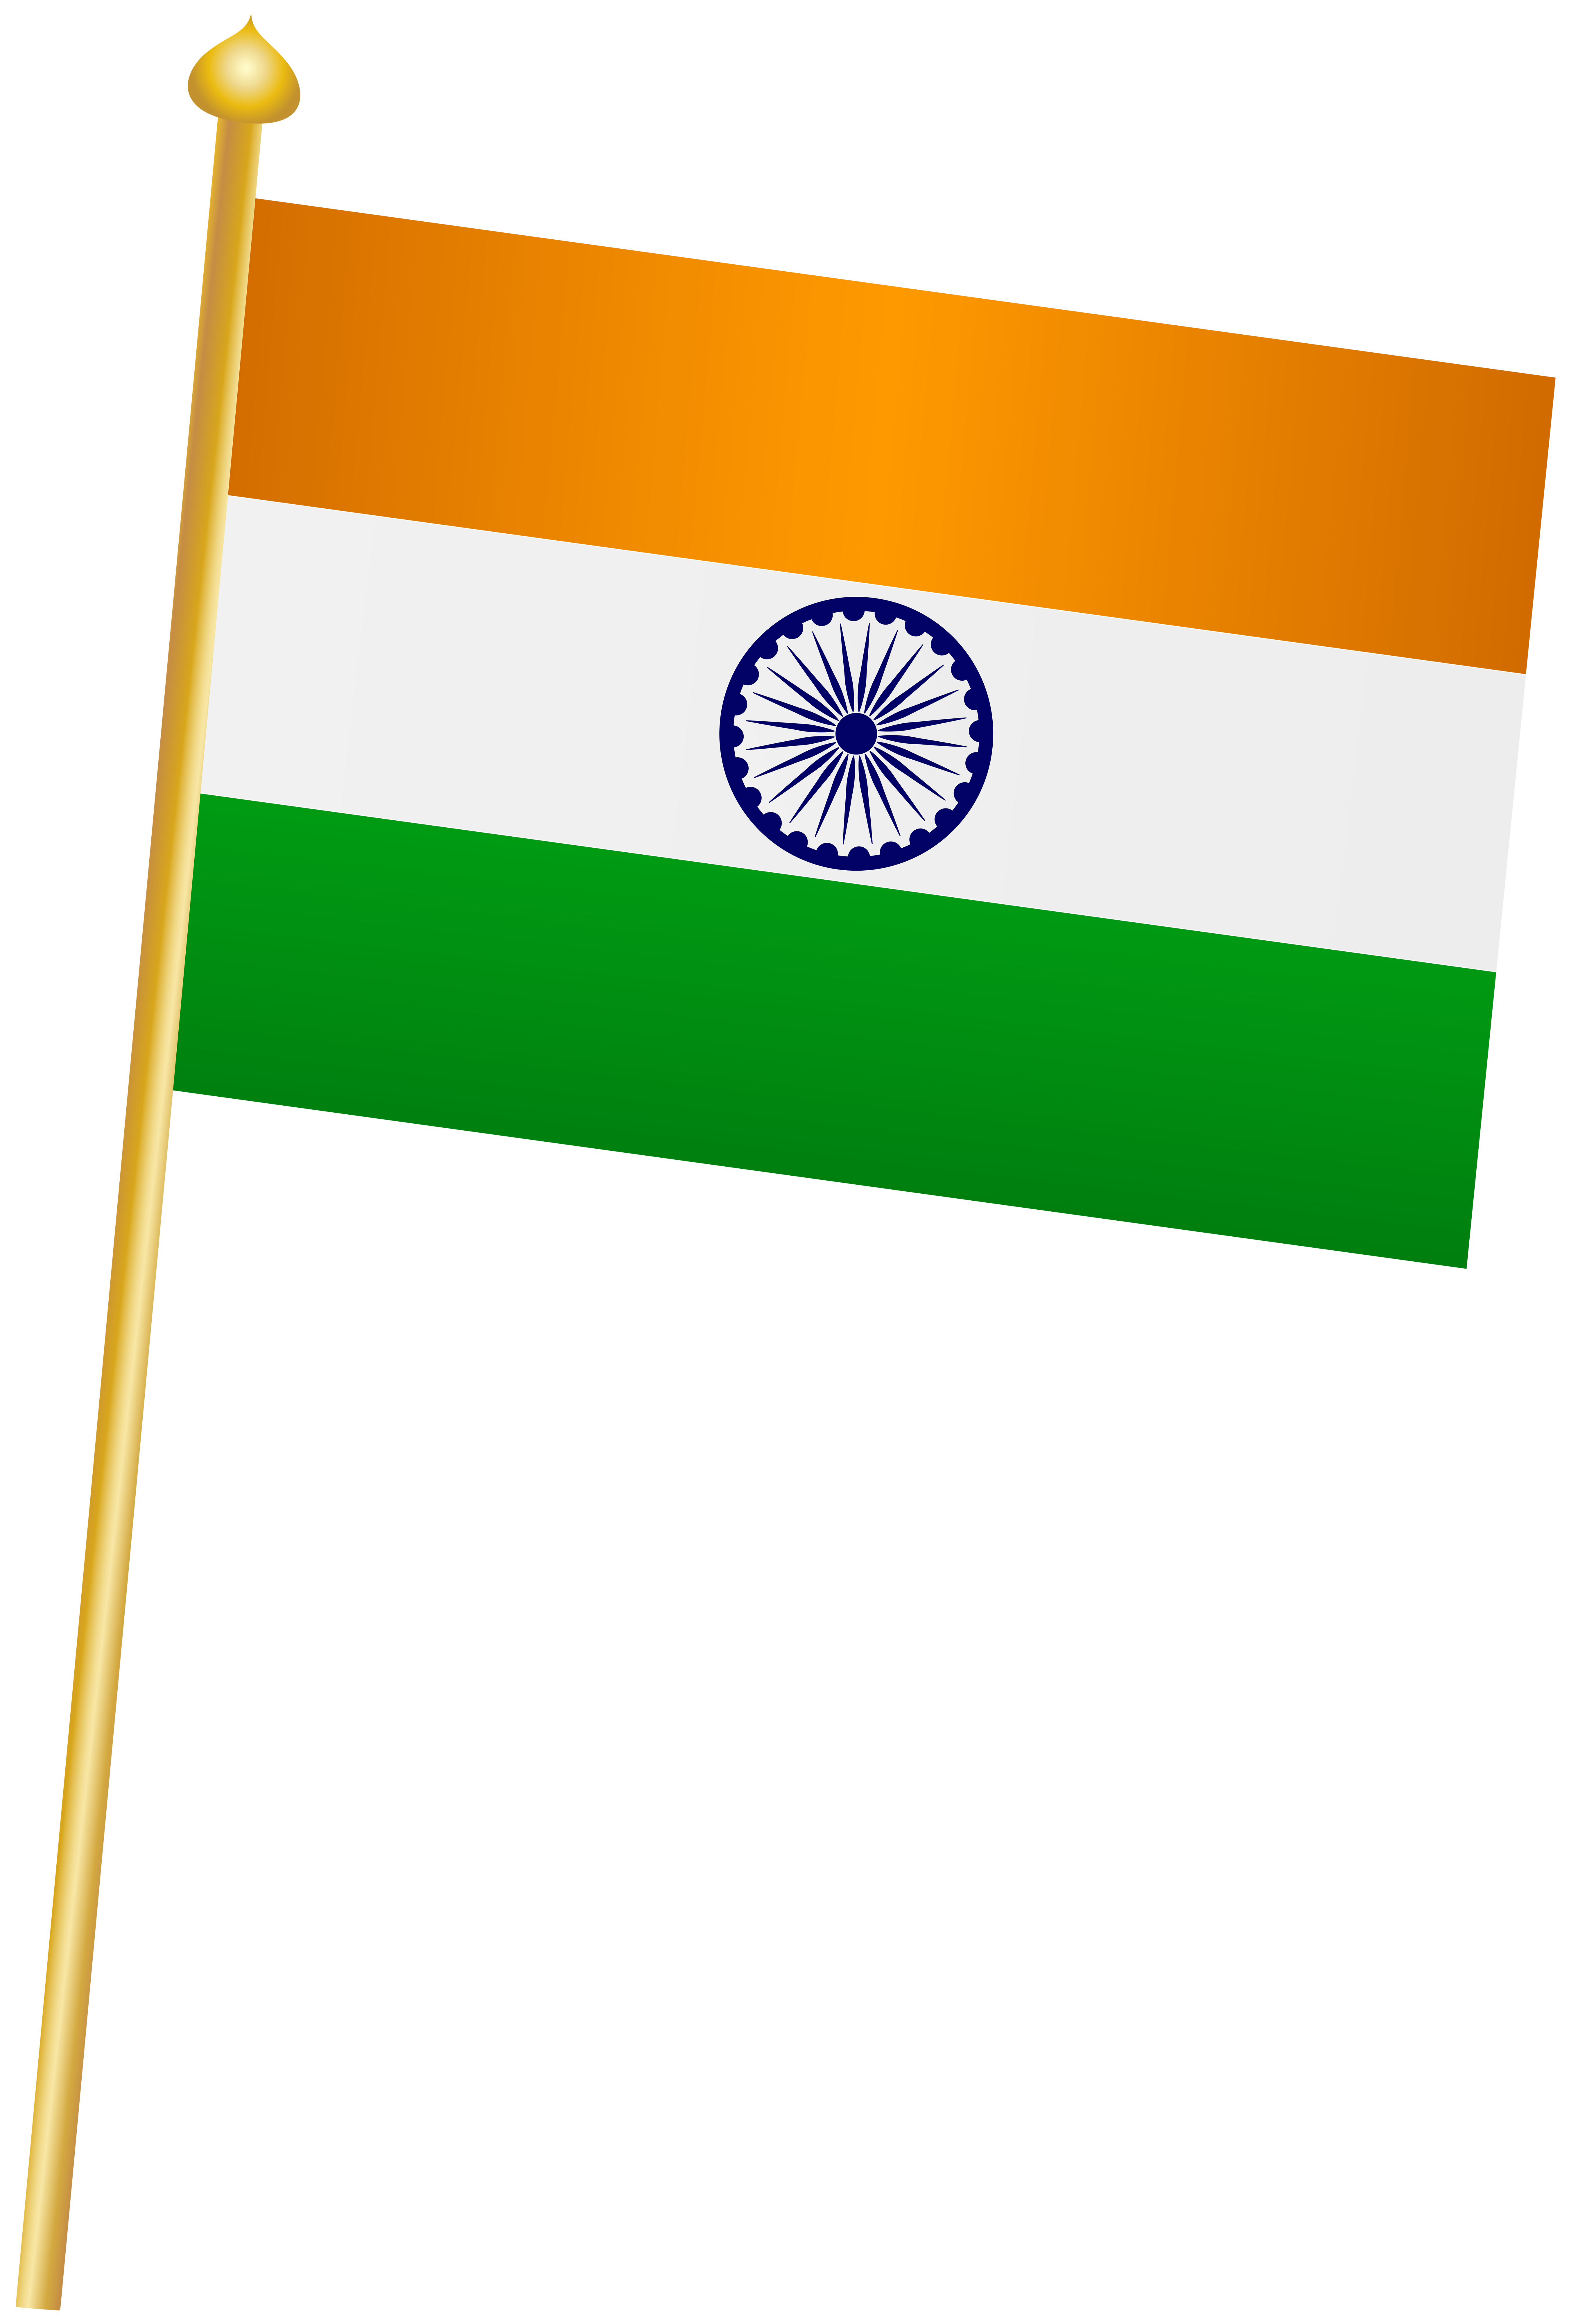 Indian flag PNG download | Studio background images, Beach background  images, Green screen background images